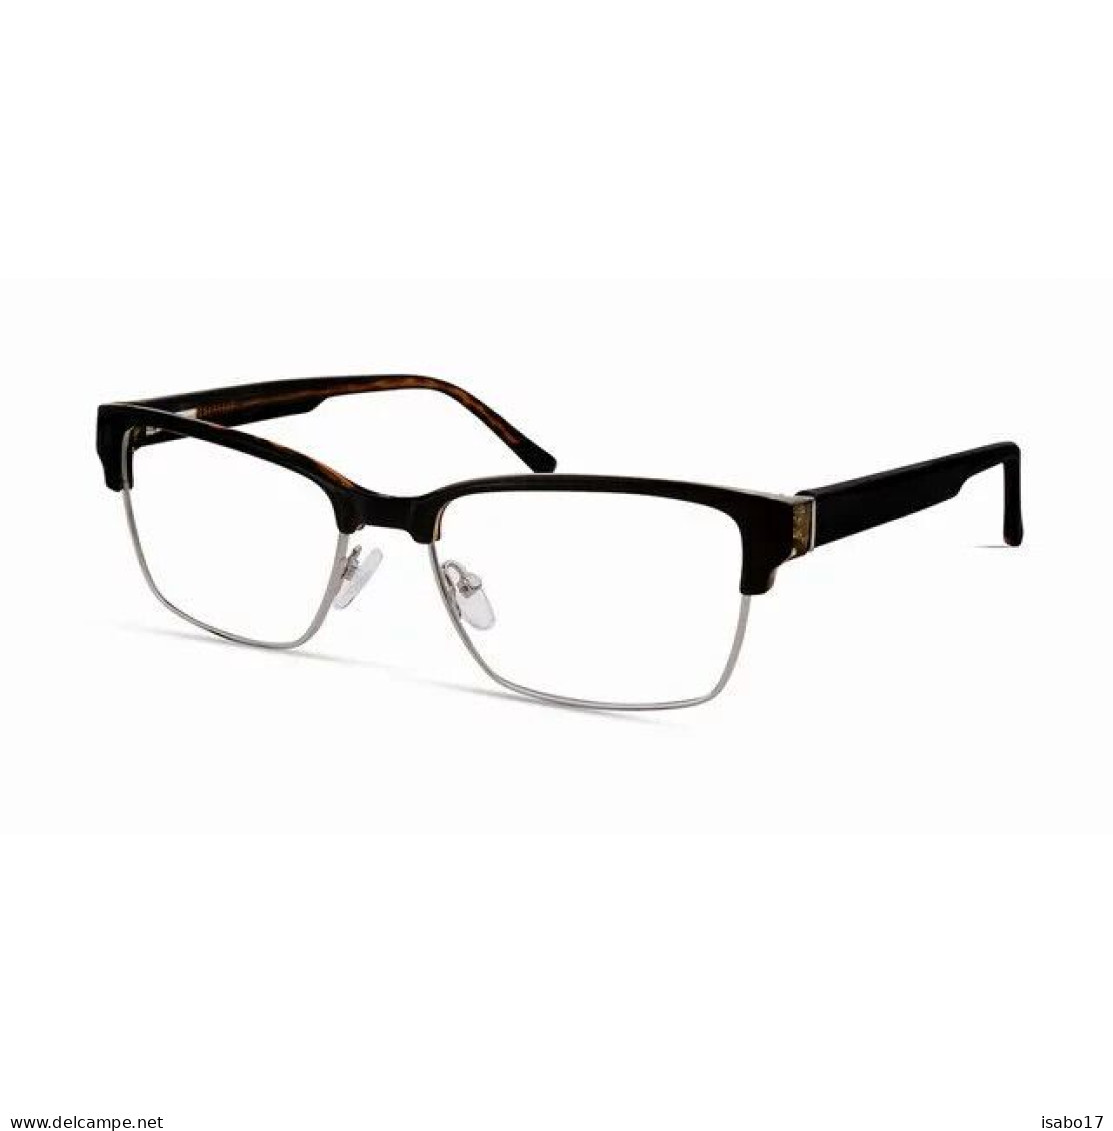 " Walmart " Modernes Herren-Brillengestell Mop49, Black Tortoise, 54-17-145 - Glasses